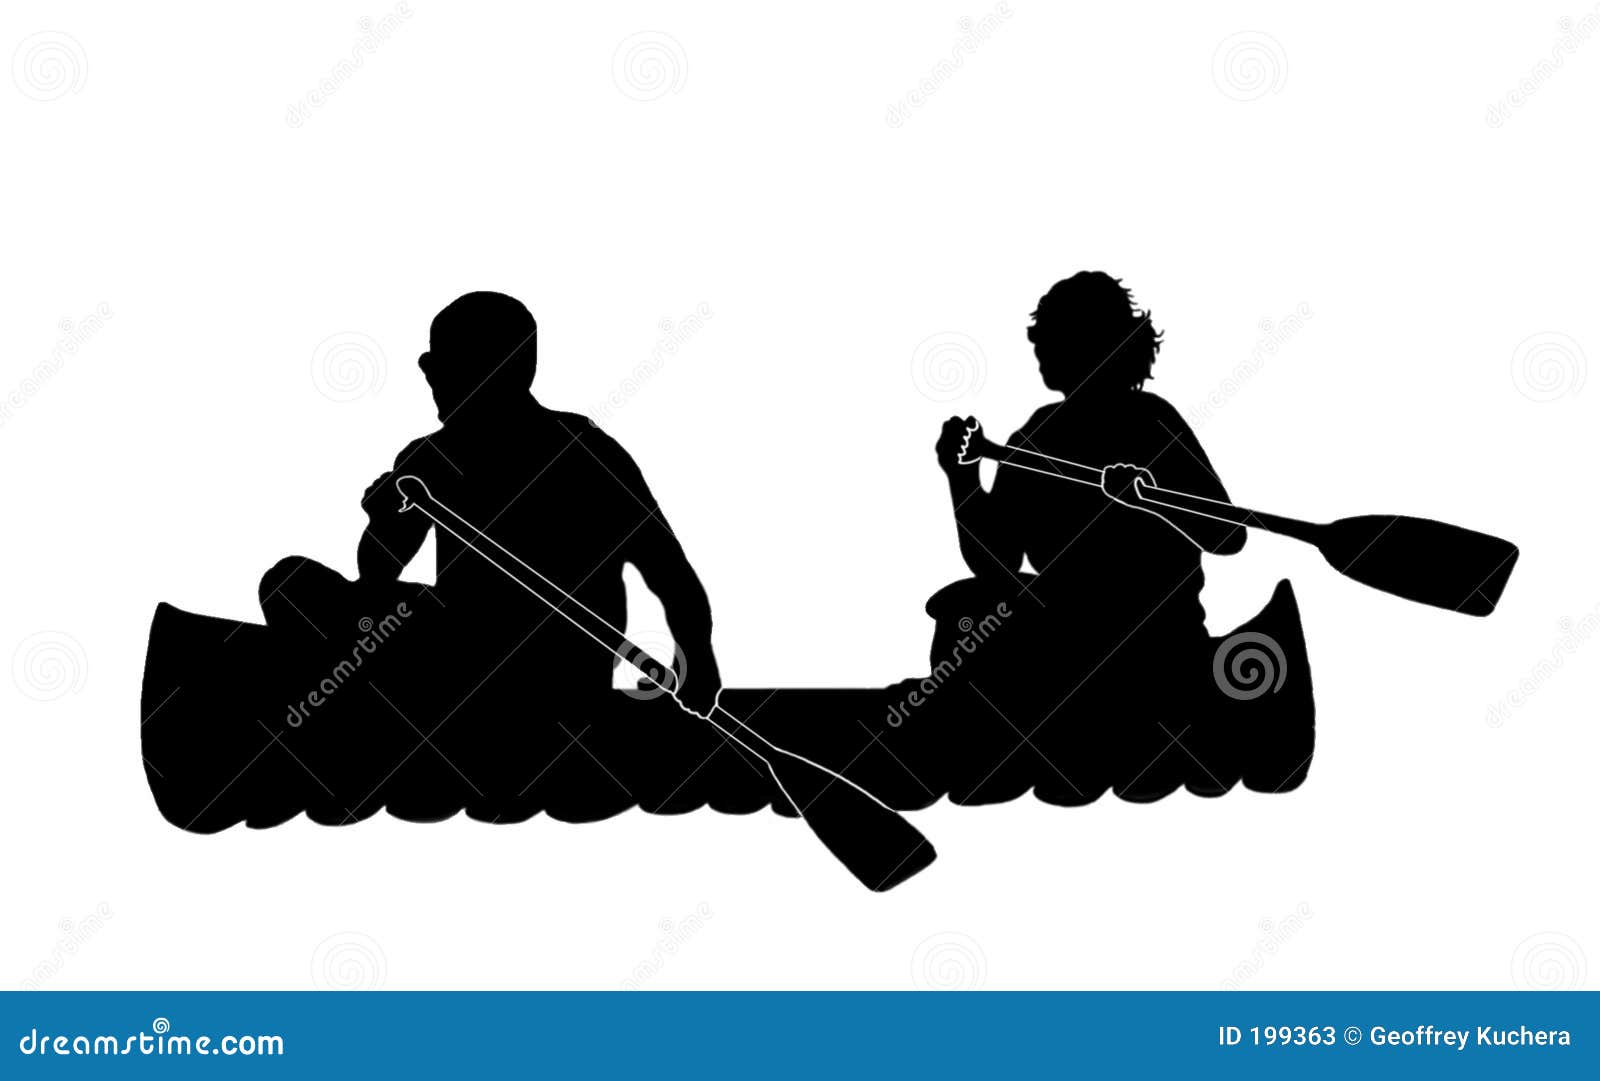 kayak clipart black and white - photo #48